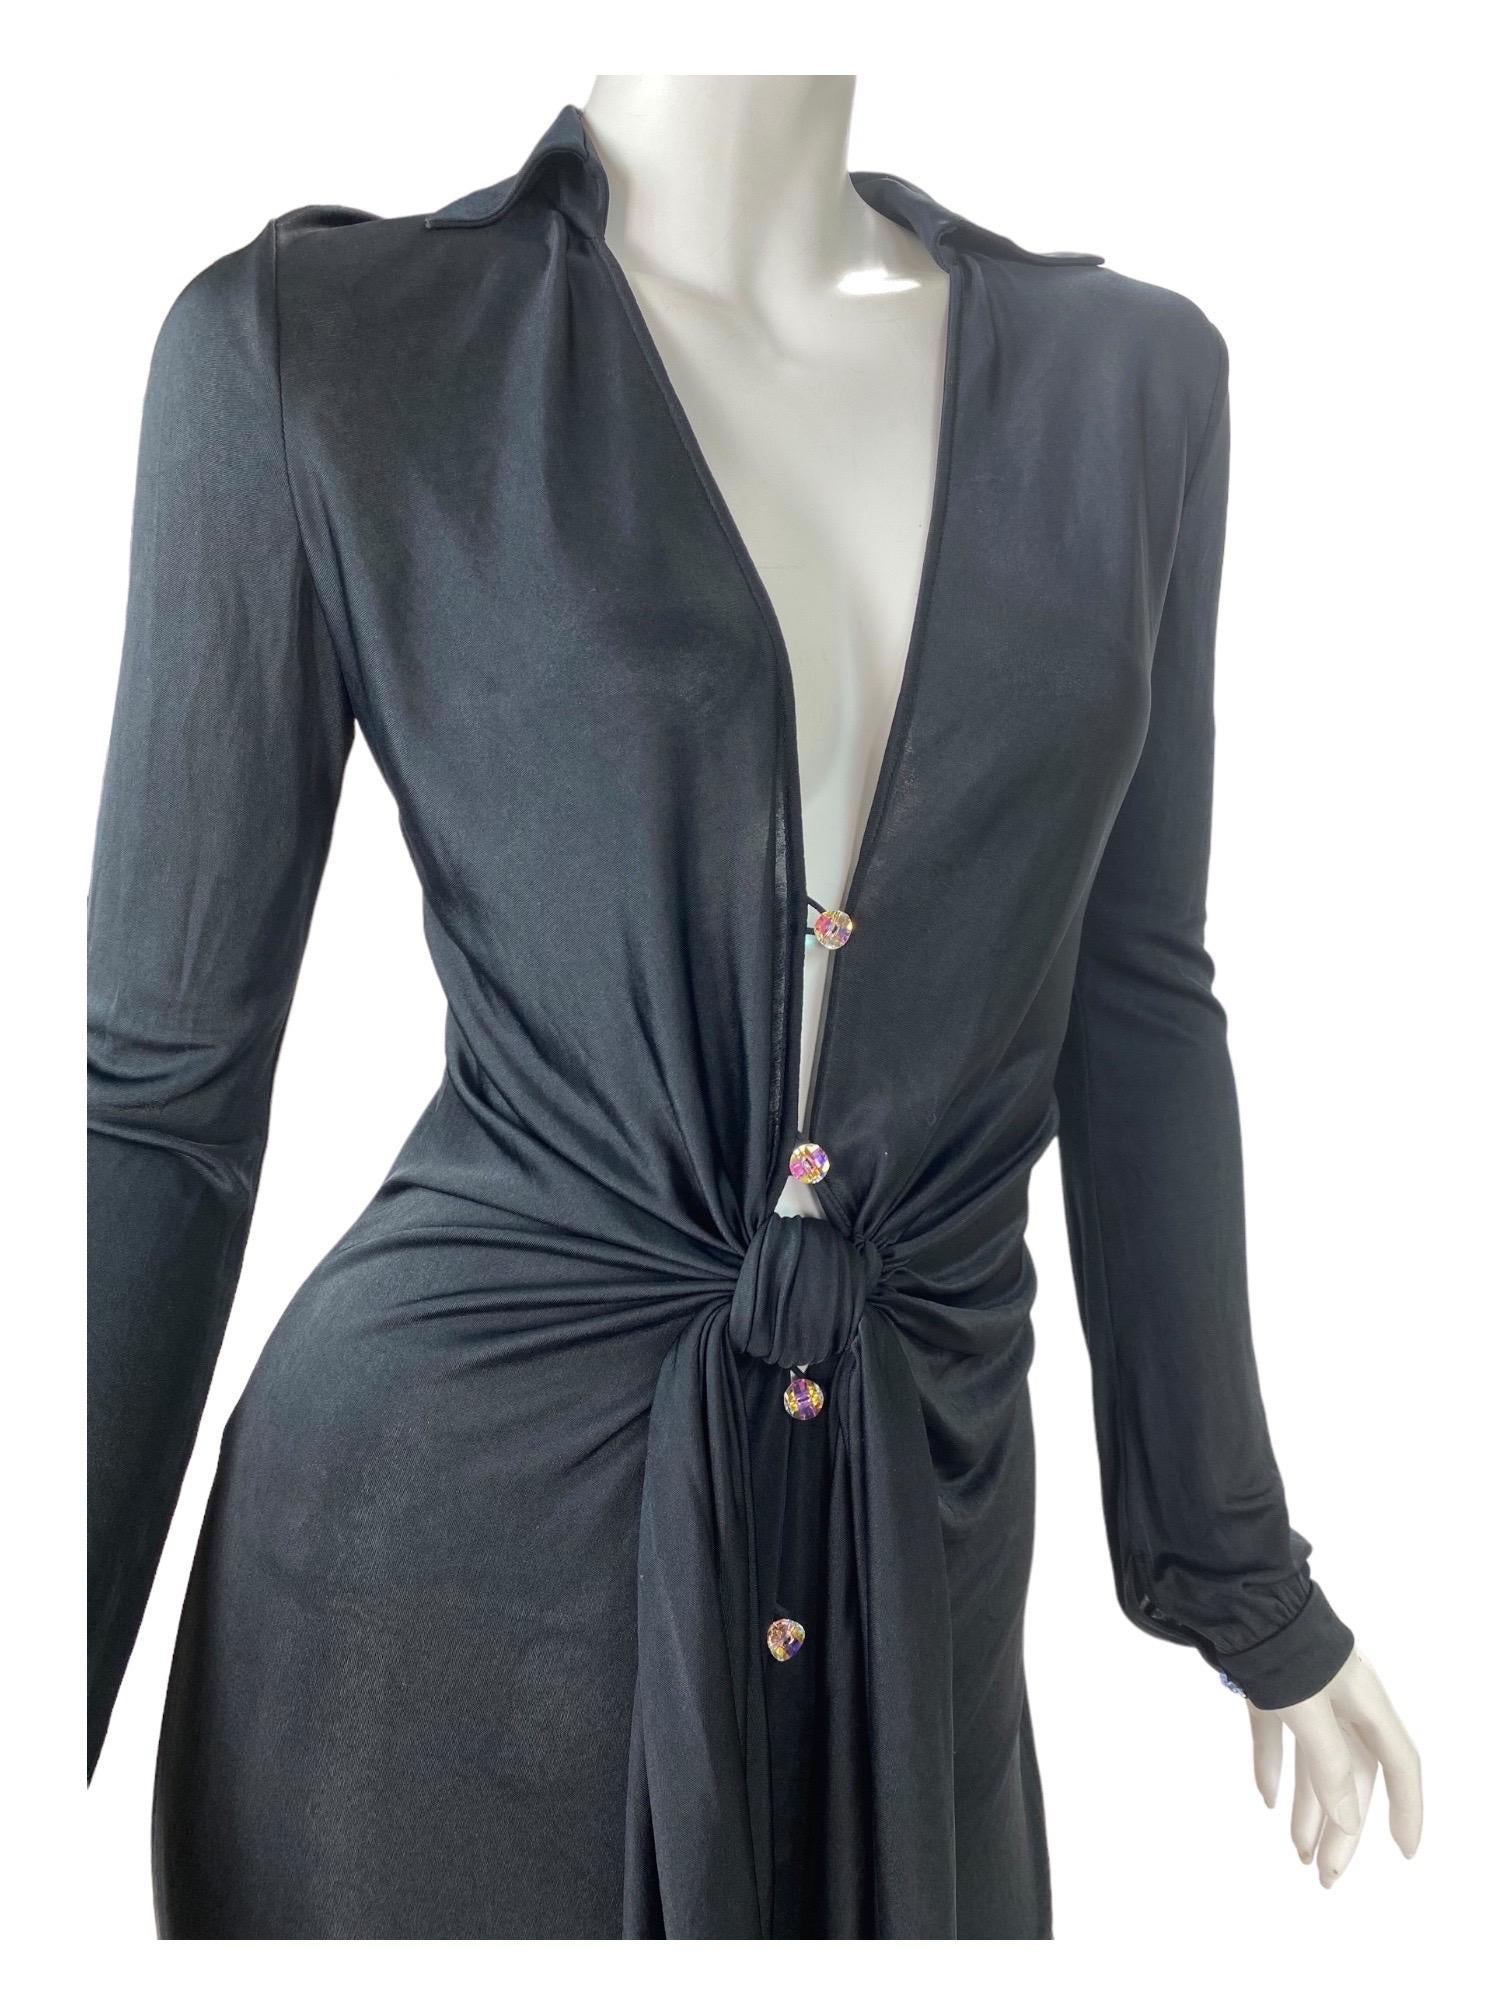 S/S 2000 Vintage Gianni Versace Couture Runway Black Deep V-Neck Dress For Sale 3